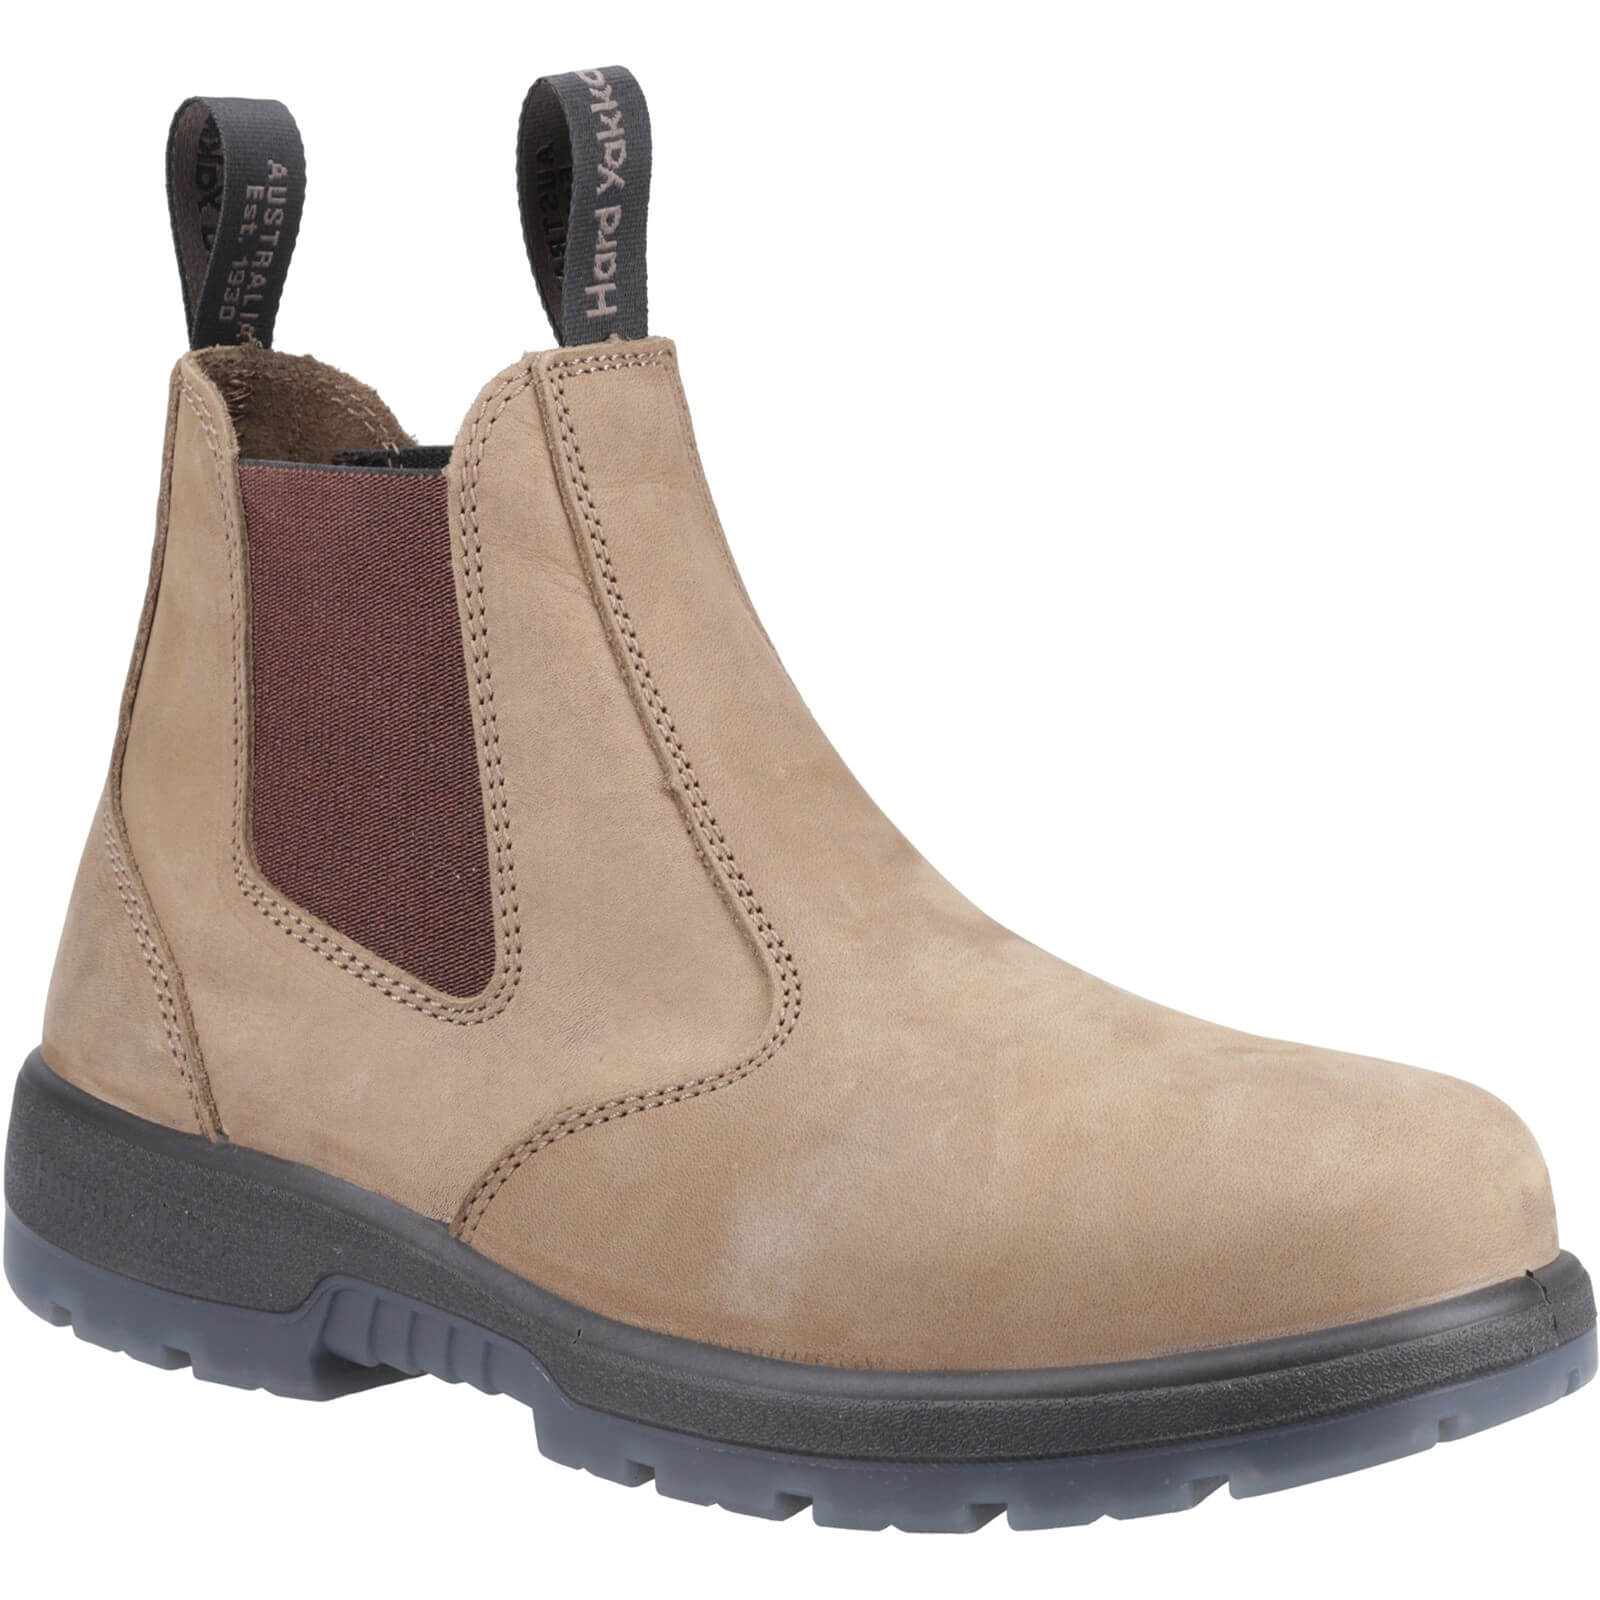 Hard Yakka Outback S3 Safety Dealer Boots